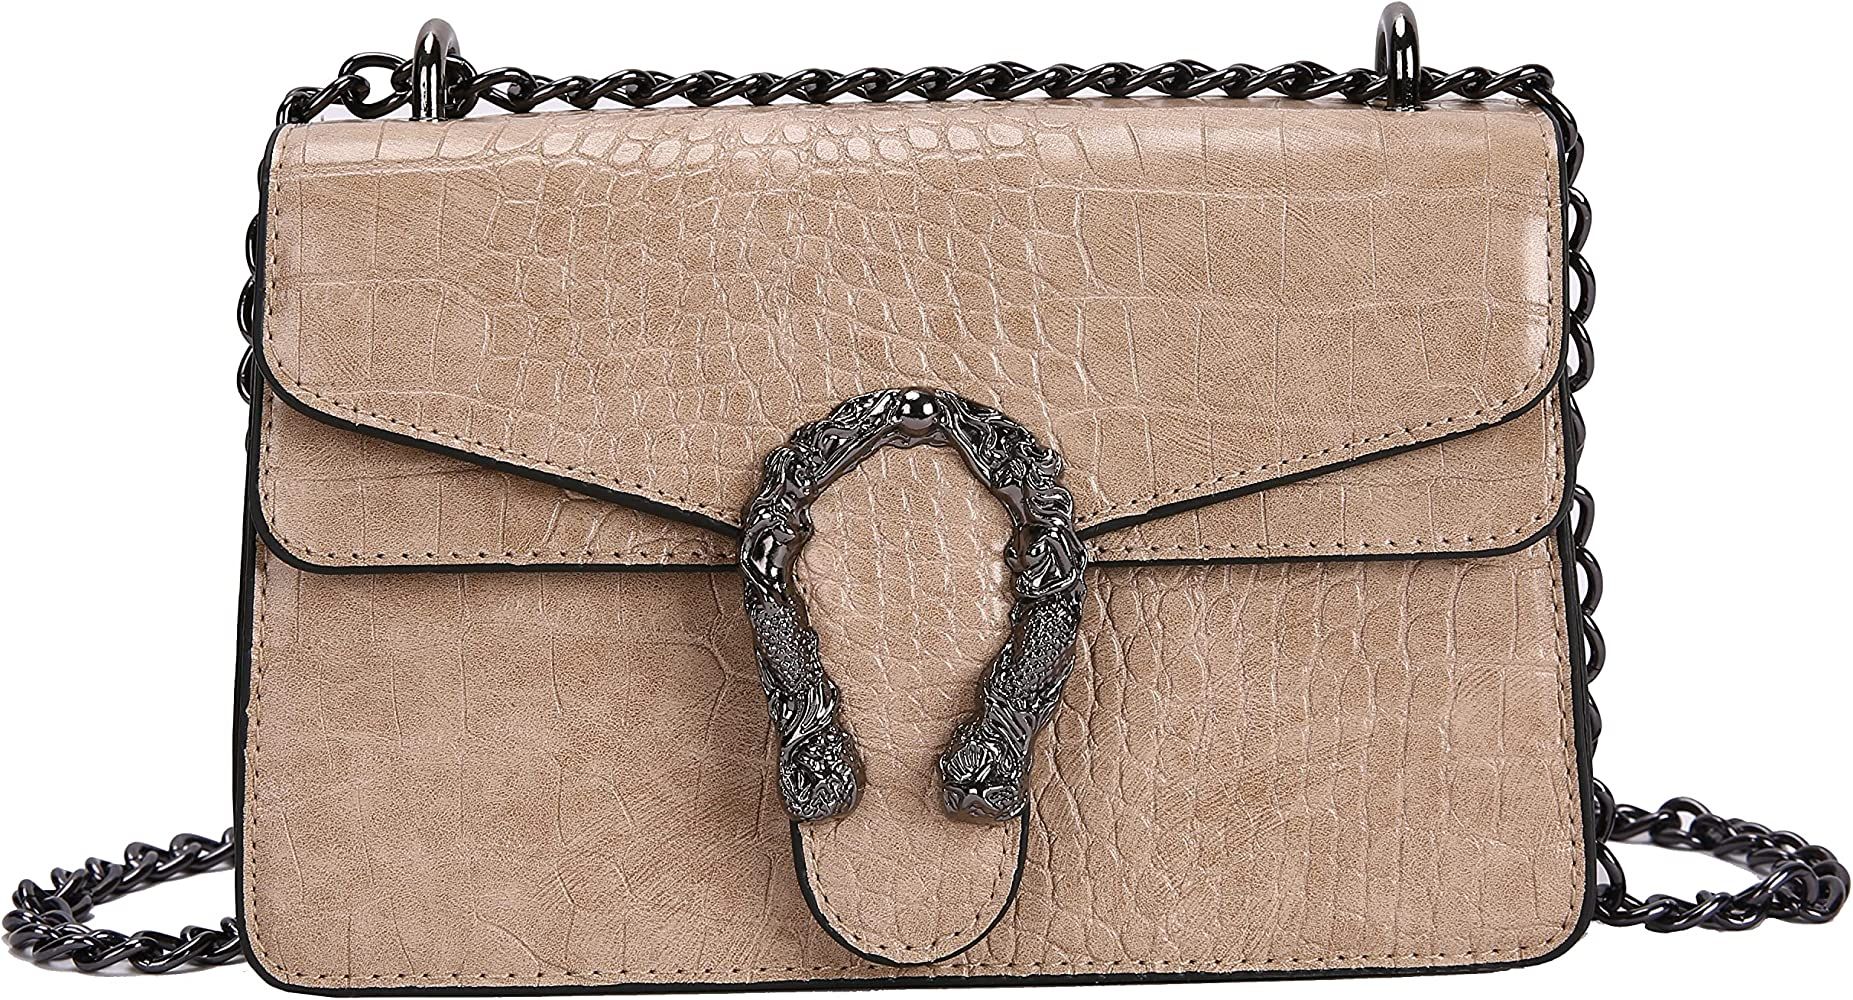 Crossbody Shoulder Evening Bag for Women - Snake Printed Leather Messenger Bag Chain Strap Clutch Sm | Amazon (US)